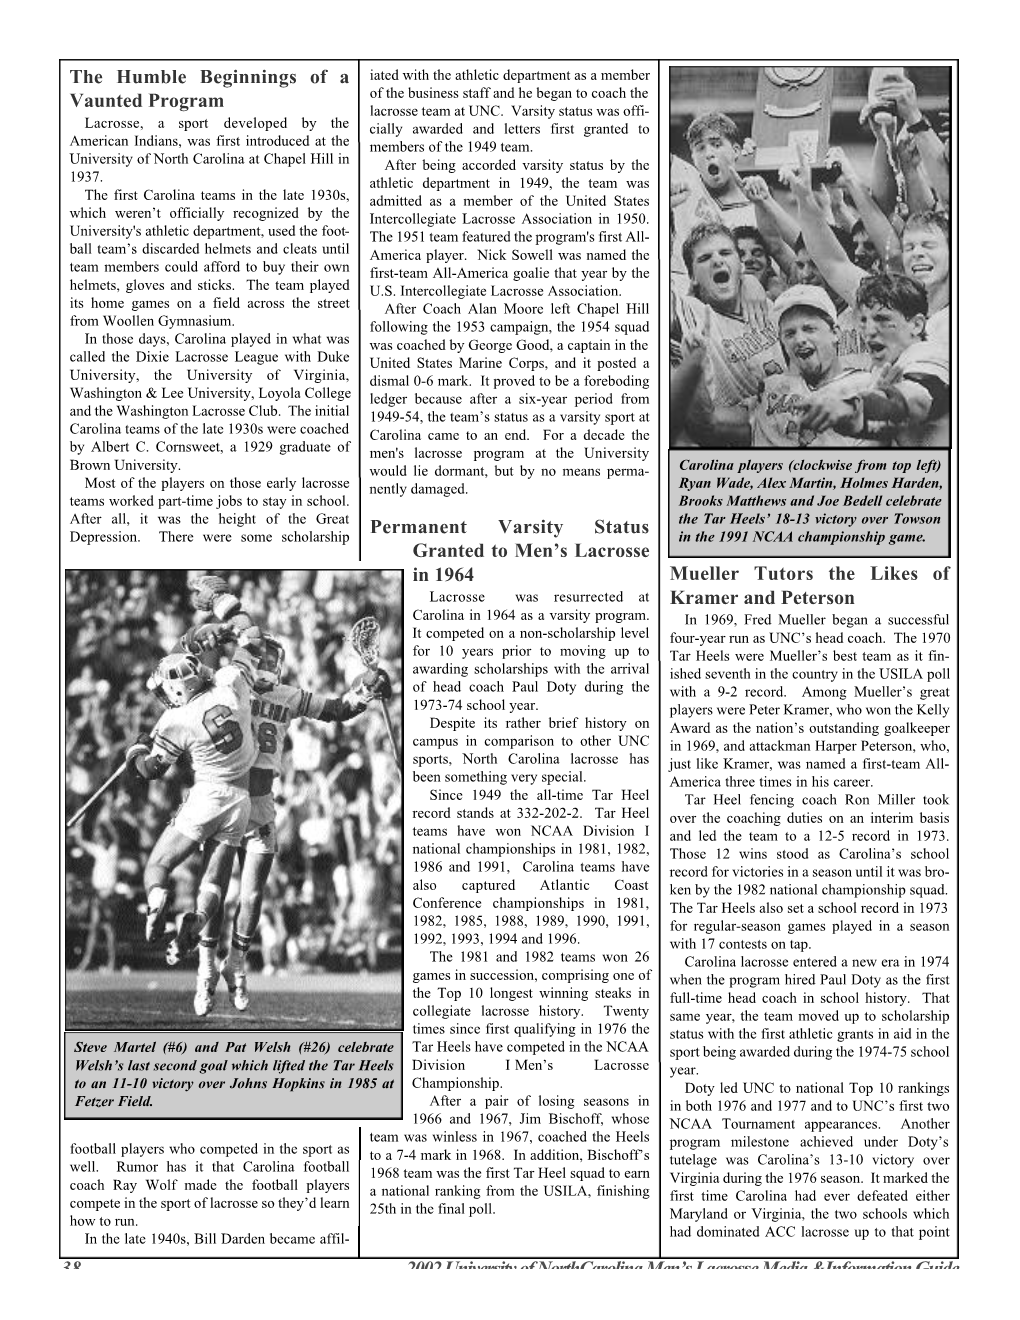 2002 University of Northcarolina Men's Lacrosse Media &Information